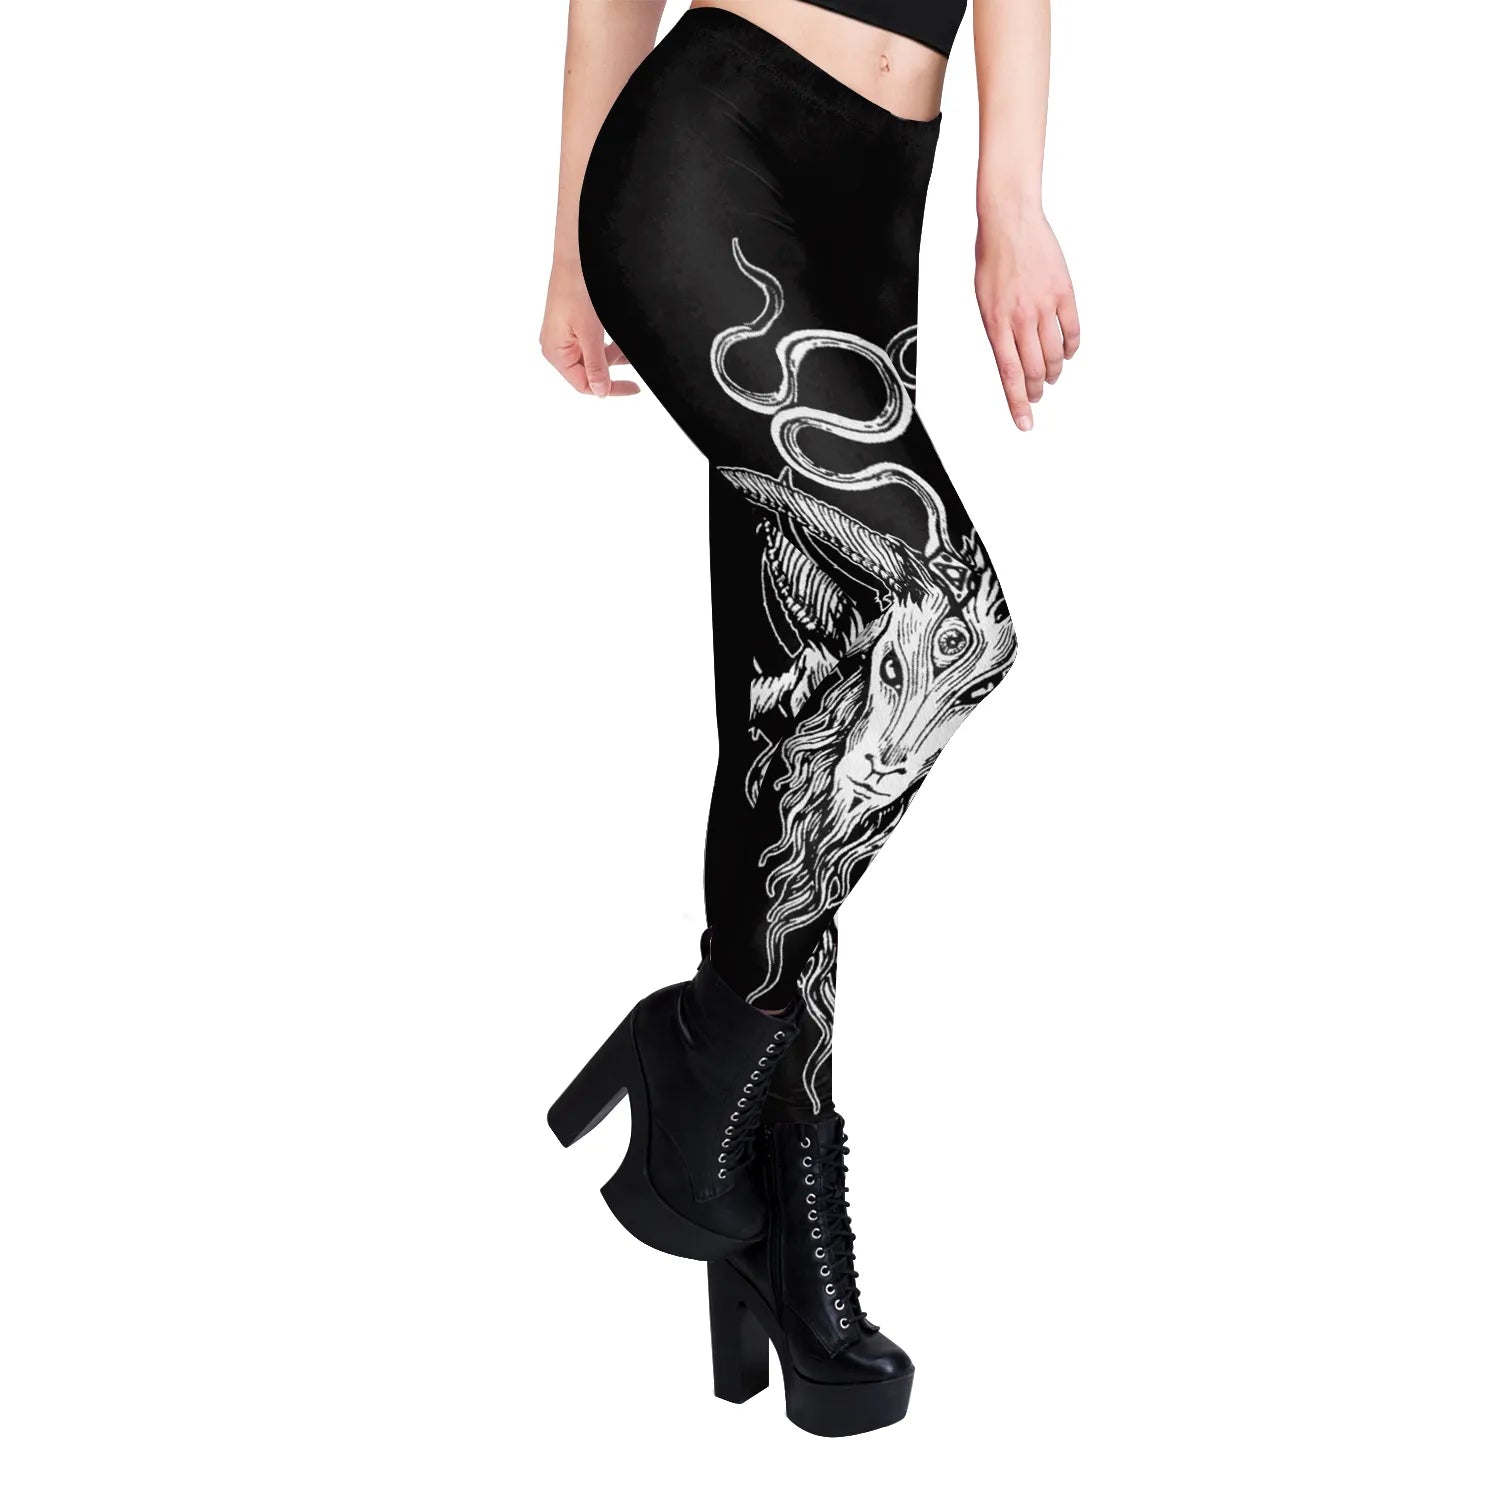 Gothic Black Graphic Leggings | Baphomet | Mid Rise Form Fitting Sleek & Stylish Total Comfort - A Gothic Universe - Leggings